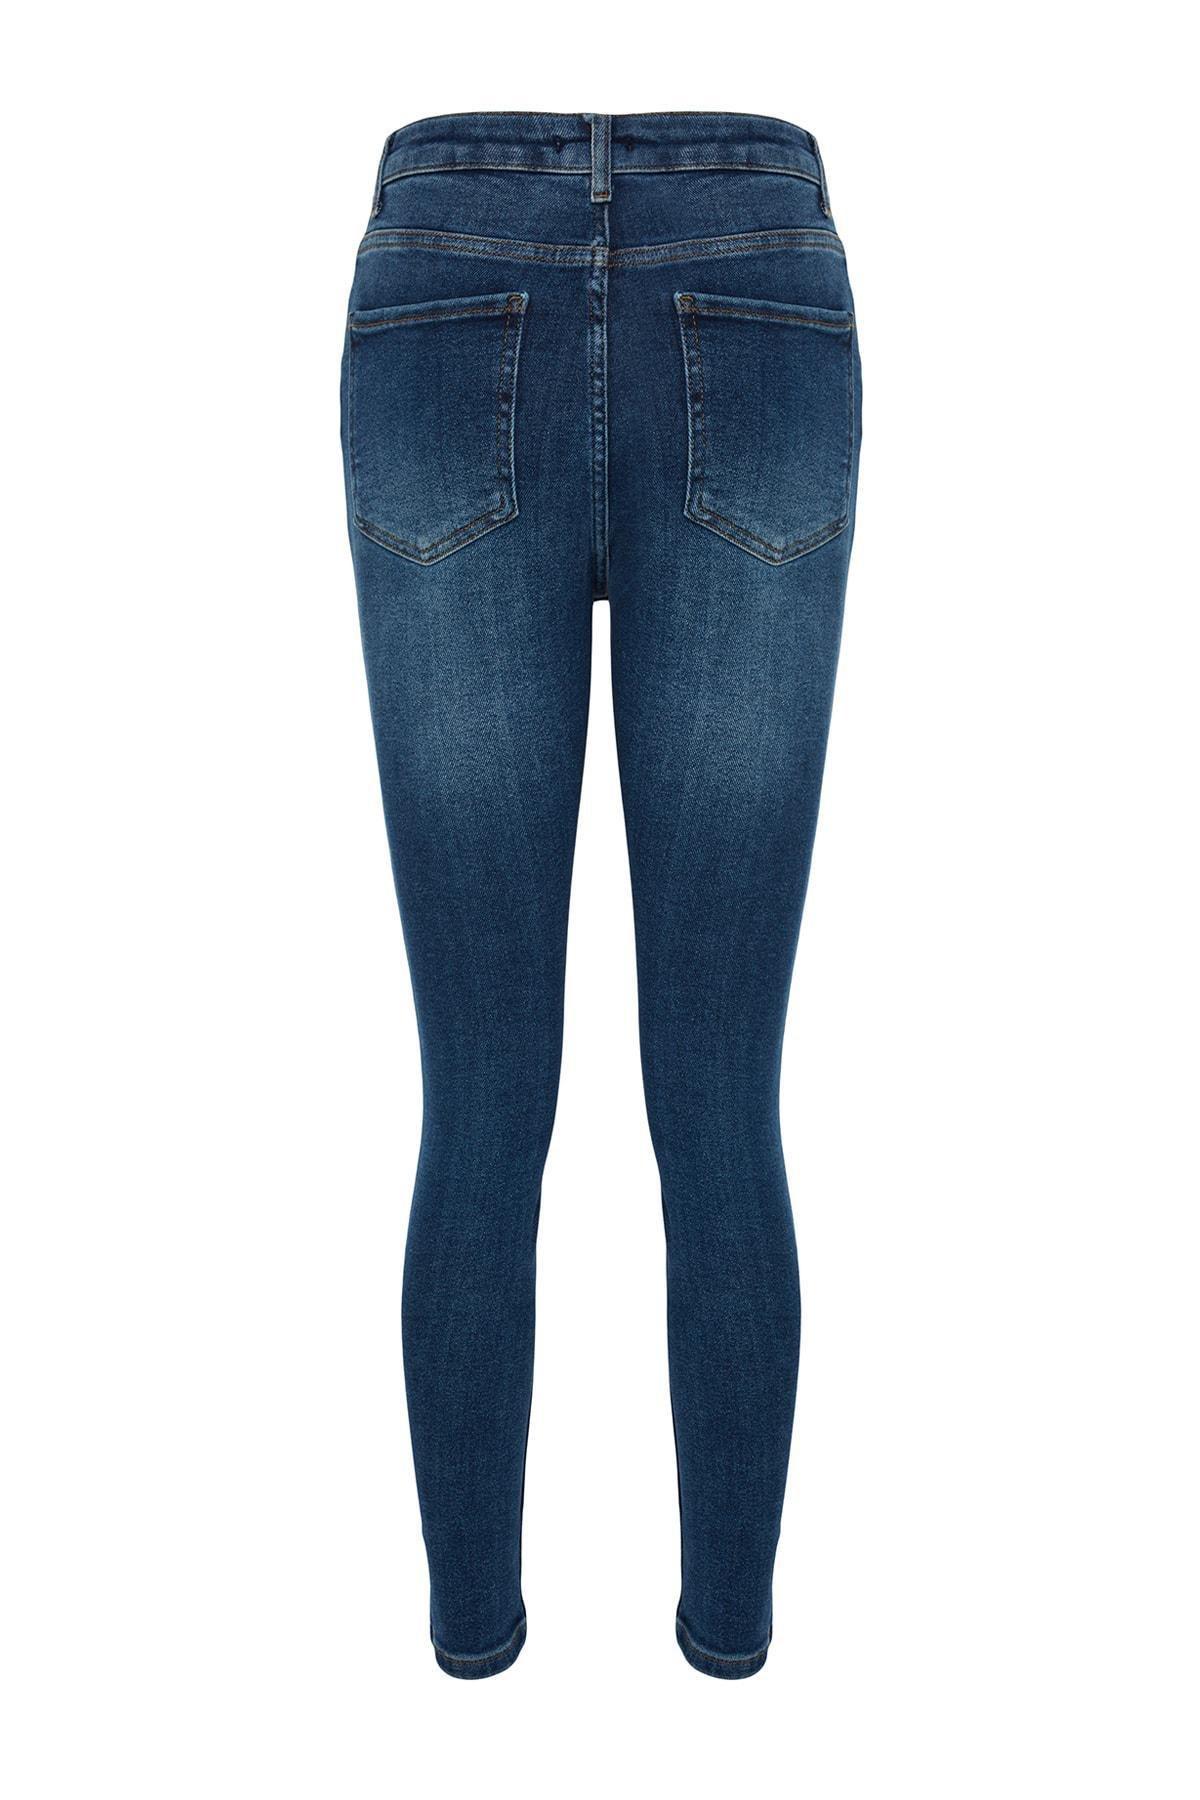 Trendyol - Blue High Waist Skinny Jeans